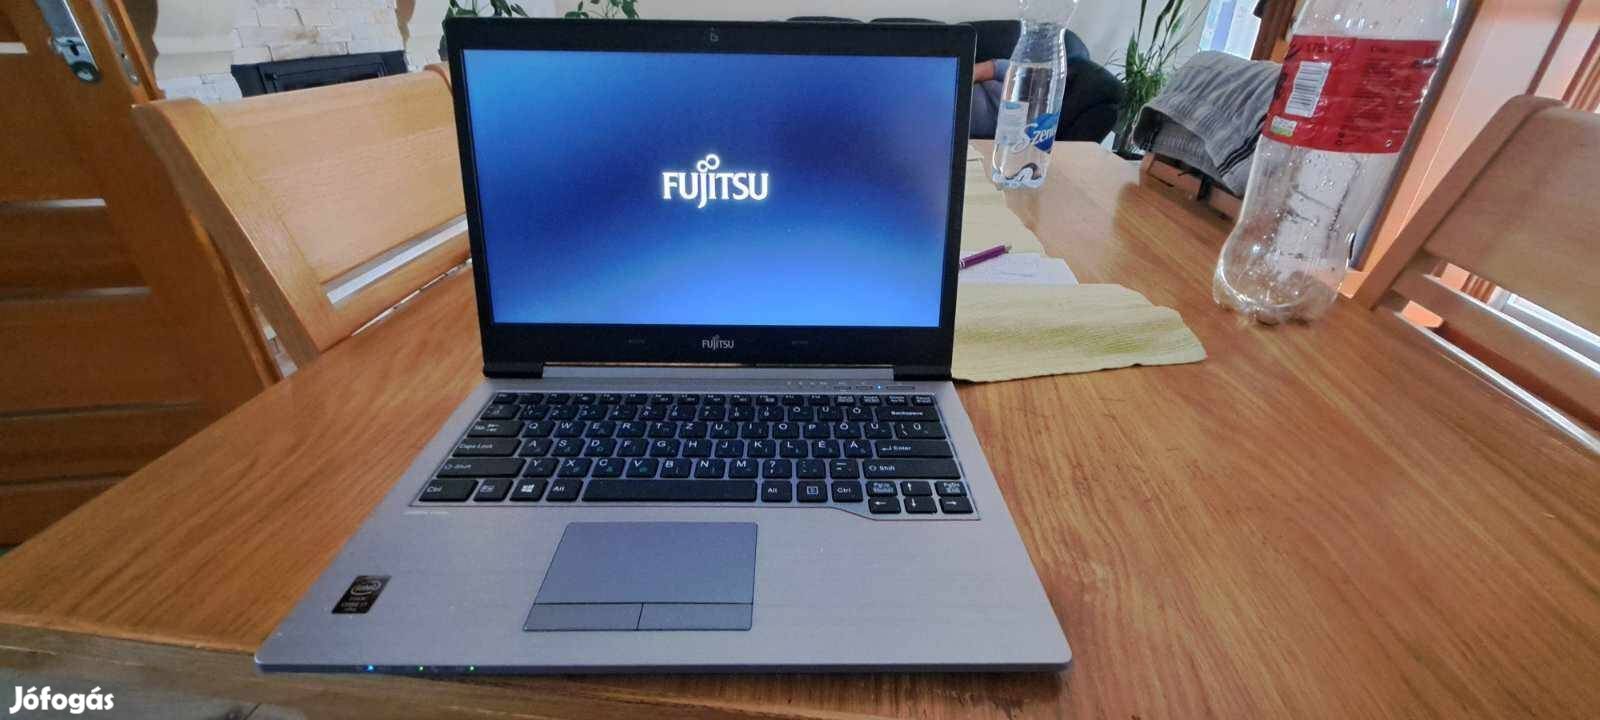 Eladó Fujitsu Lifebook 745 Bundle Laptop